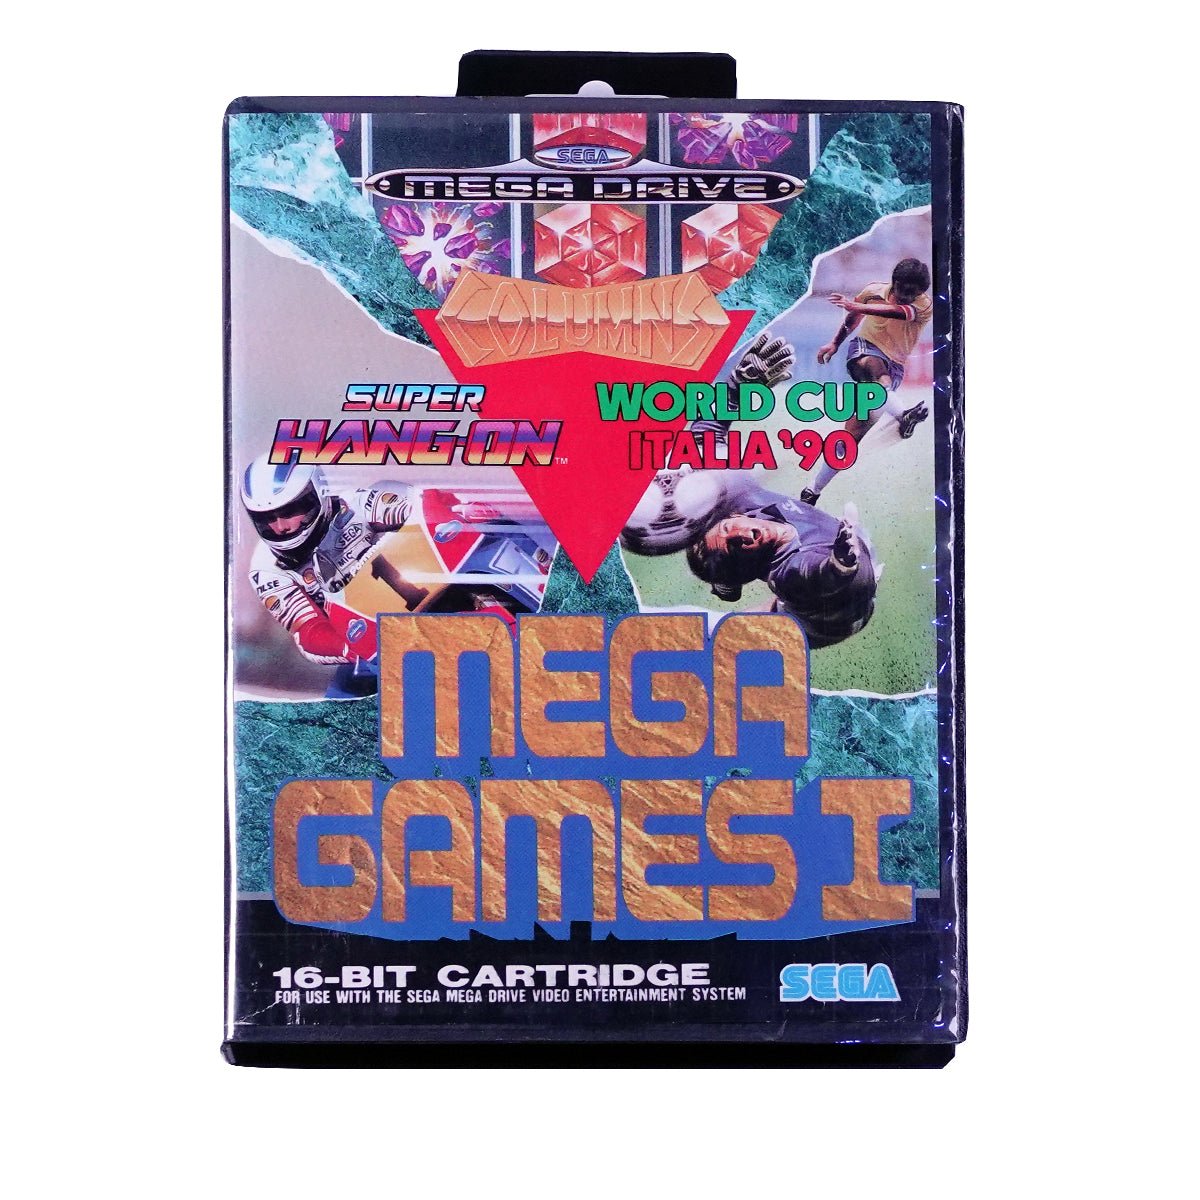 (Pre-Owned) World Cup Italia '90 & Super Hang-On - Sega Mega Drive Game - ريترو - Store 974 | ستور ٩٧٤